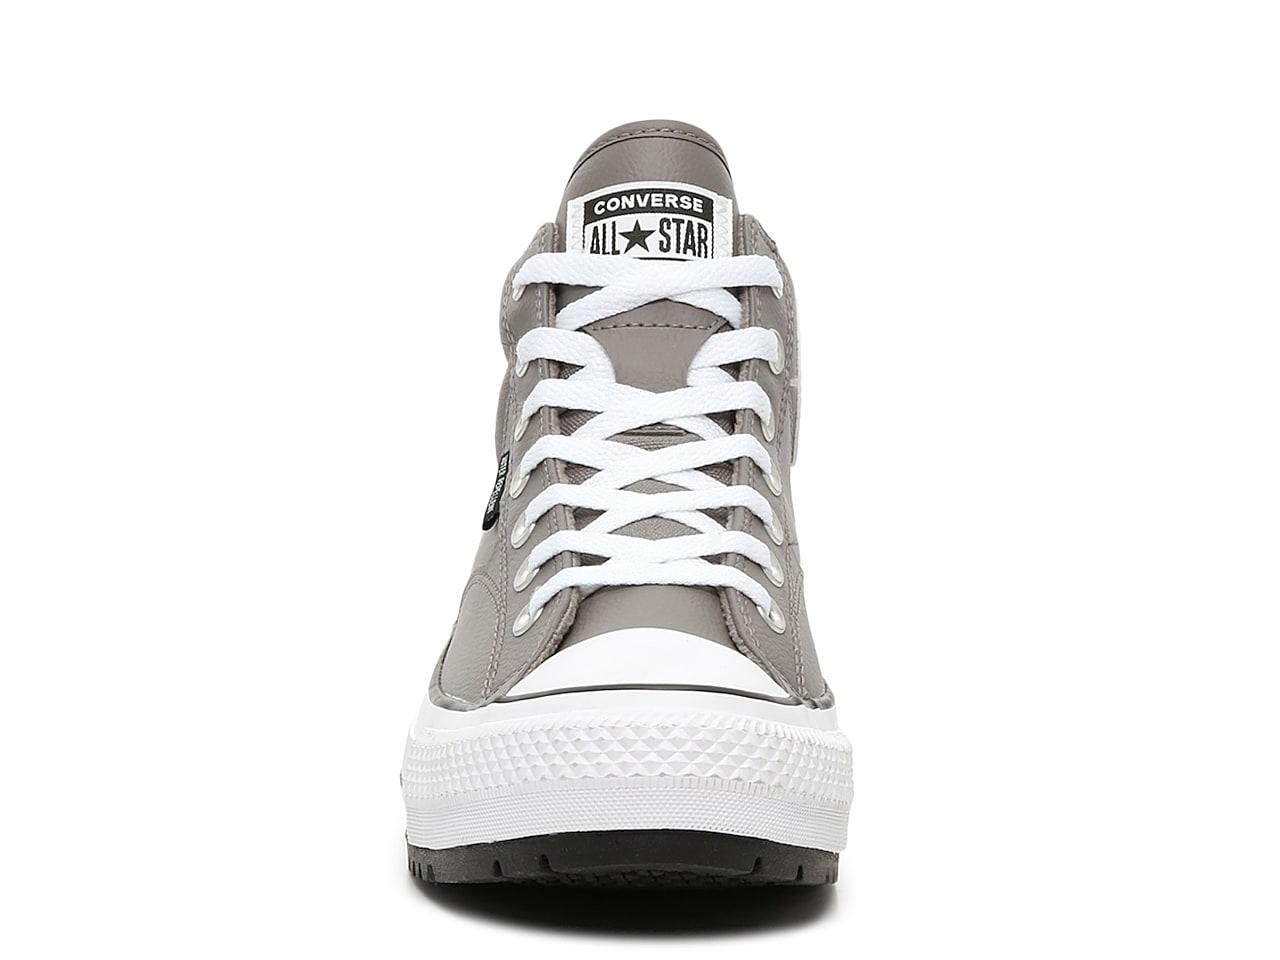 All Lyst in Malden Street Converse Taylor White Sneaker Star | Chuck for Men